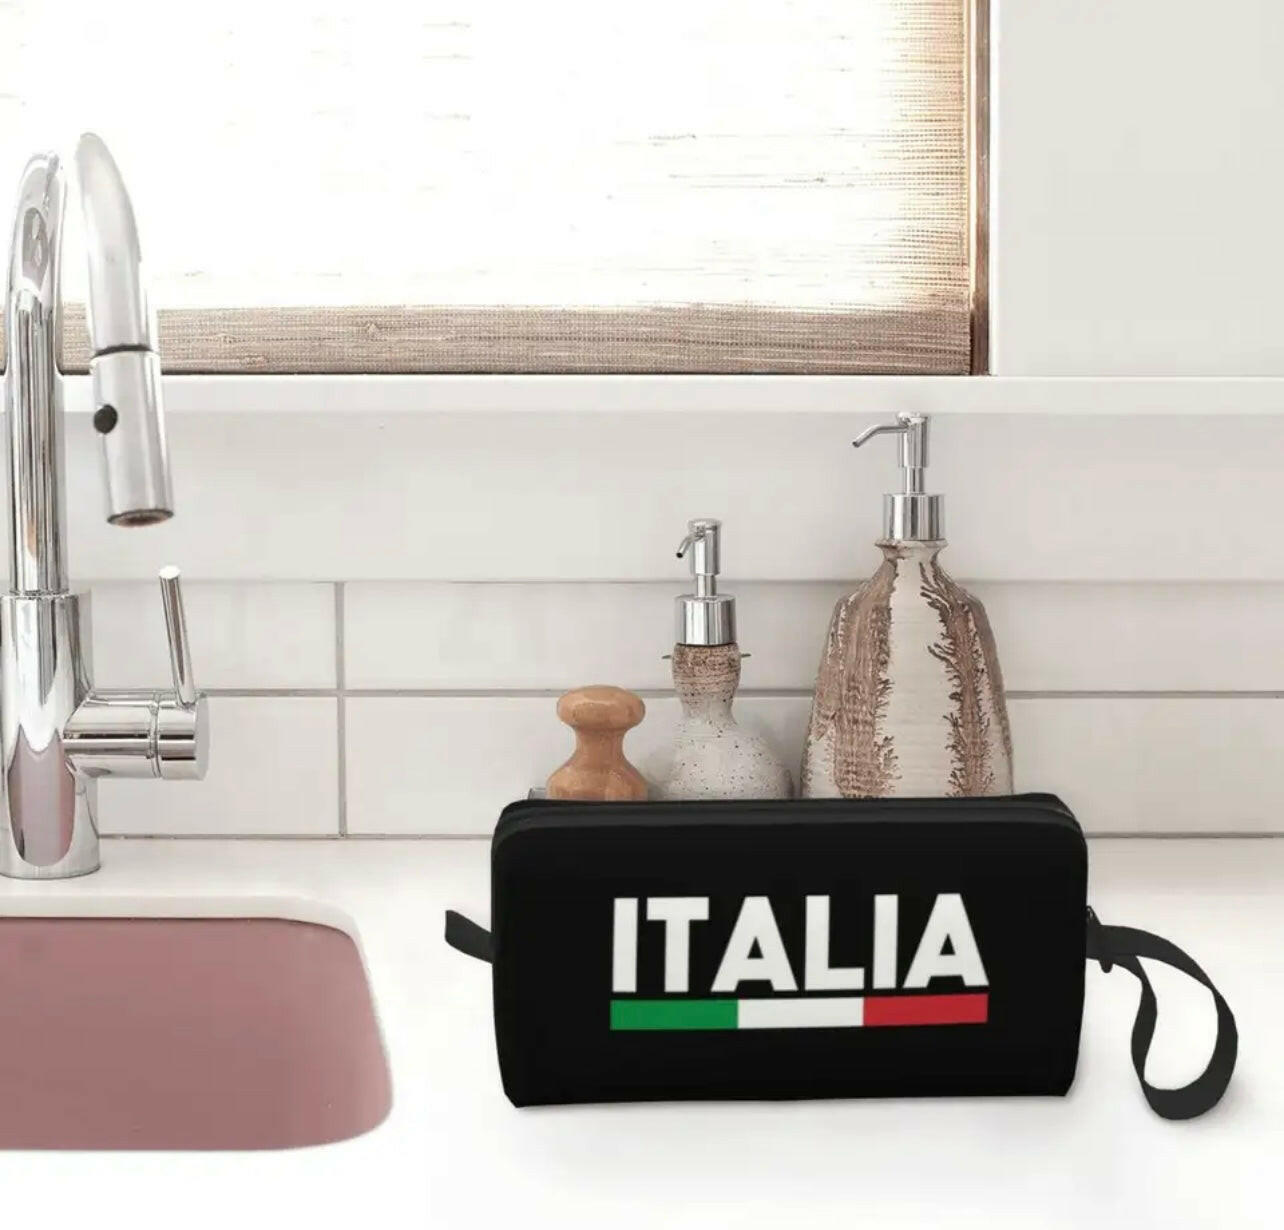 Italia Large Cosmetic/Accessories Travel Bag.